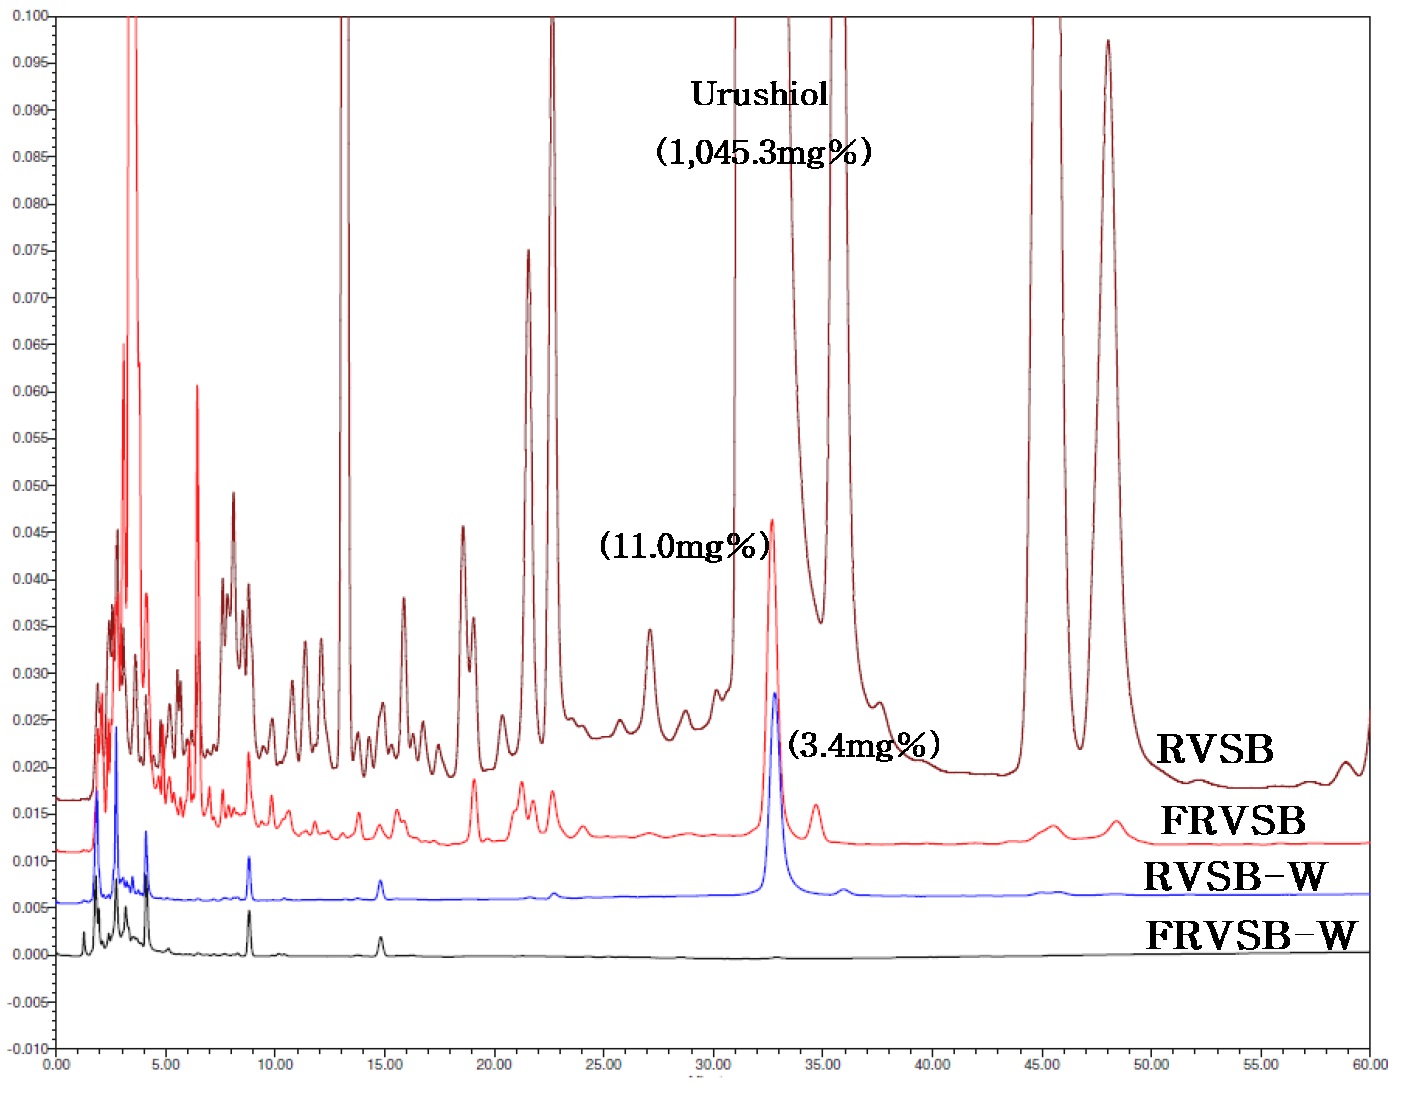 Fig. 1-1. Comparison of urushiol chromatogram between RVSB and FRVSB water extract